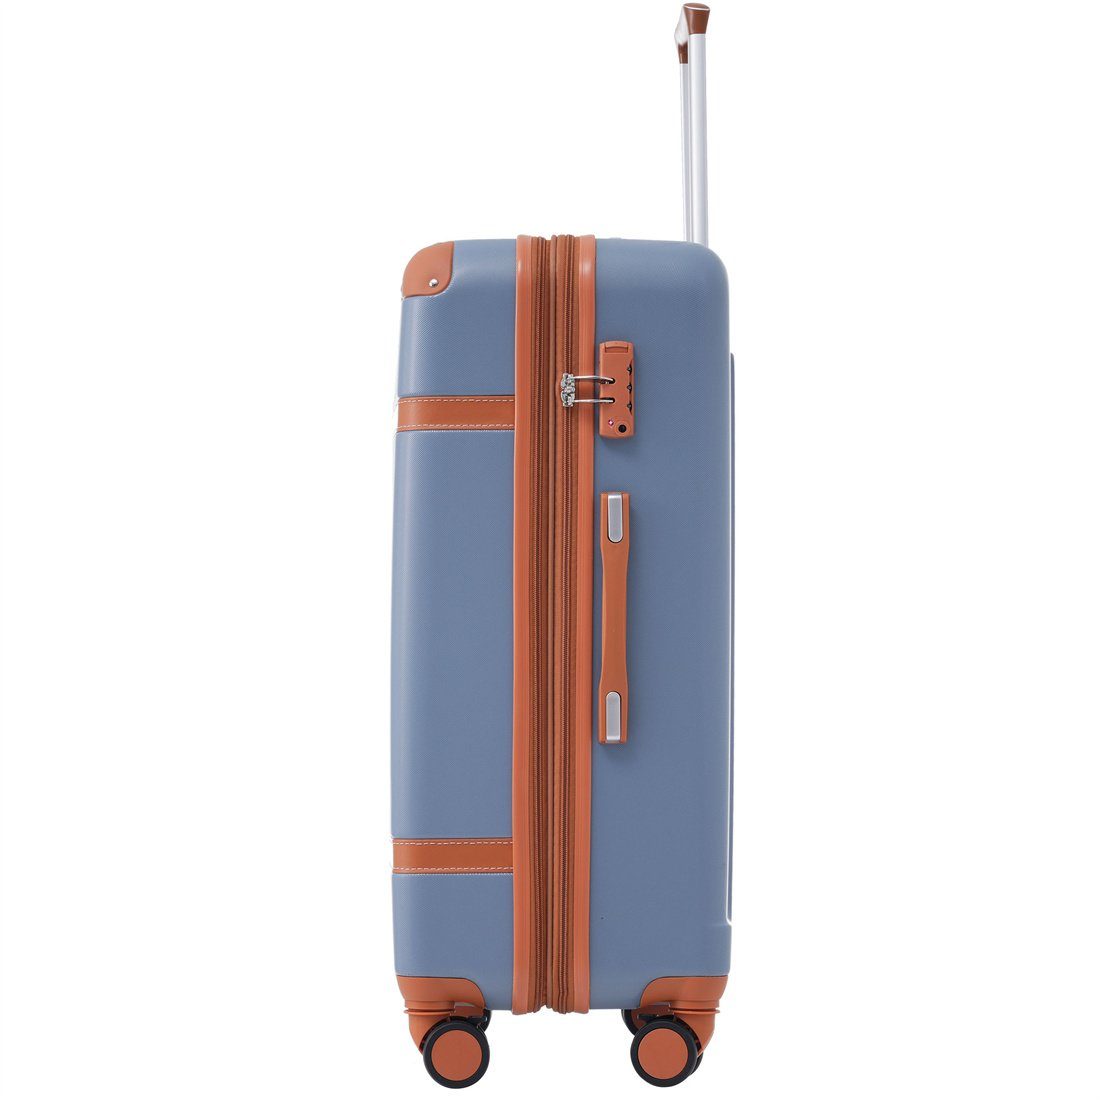 Hartschalen-Koffer, (Dunstblau+braun) Koffer Rollen, DÖRÖY Handgepäck 4 Rollkoffer,